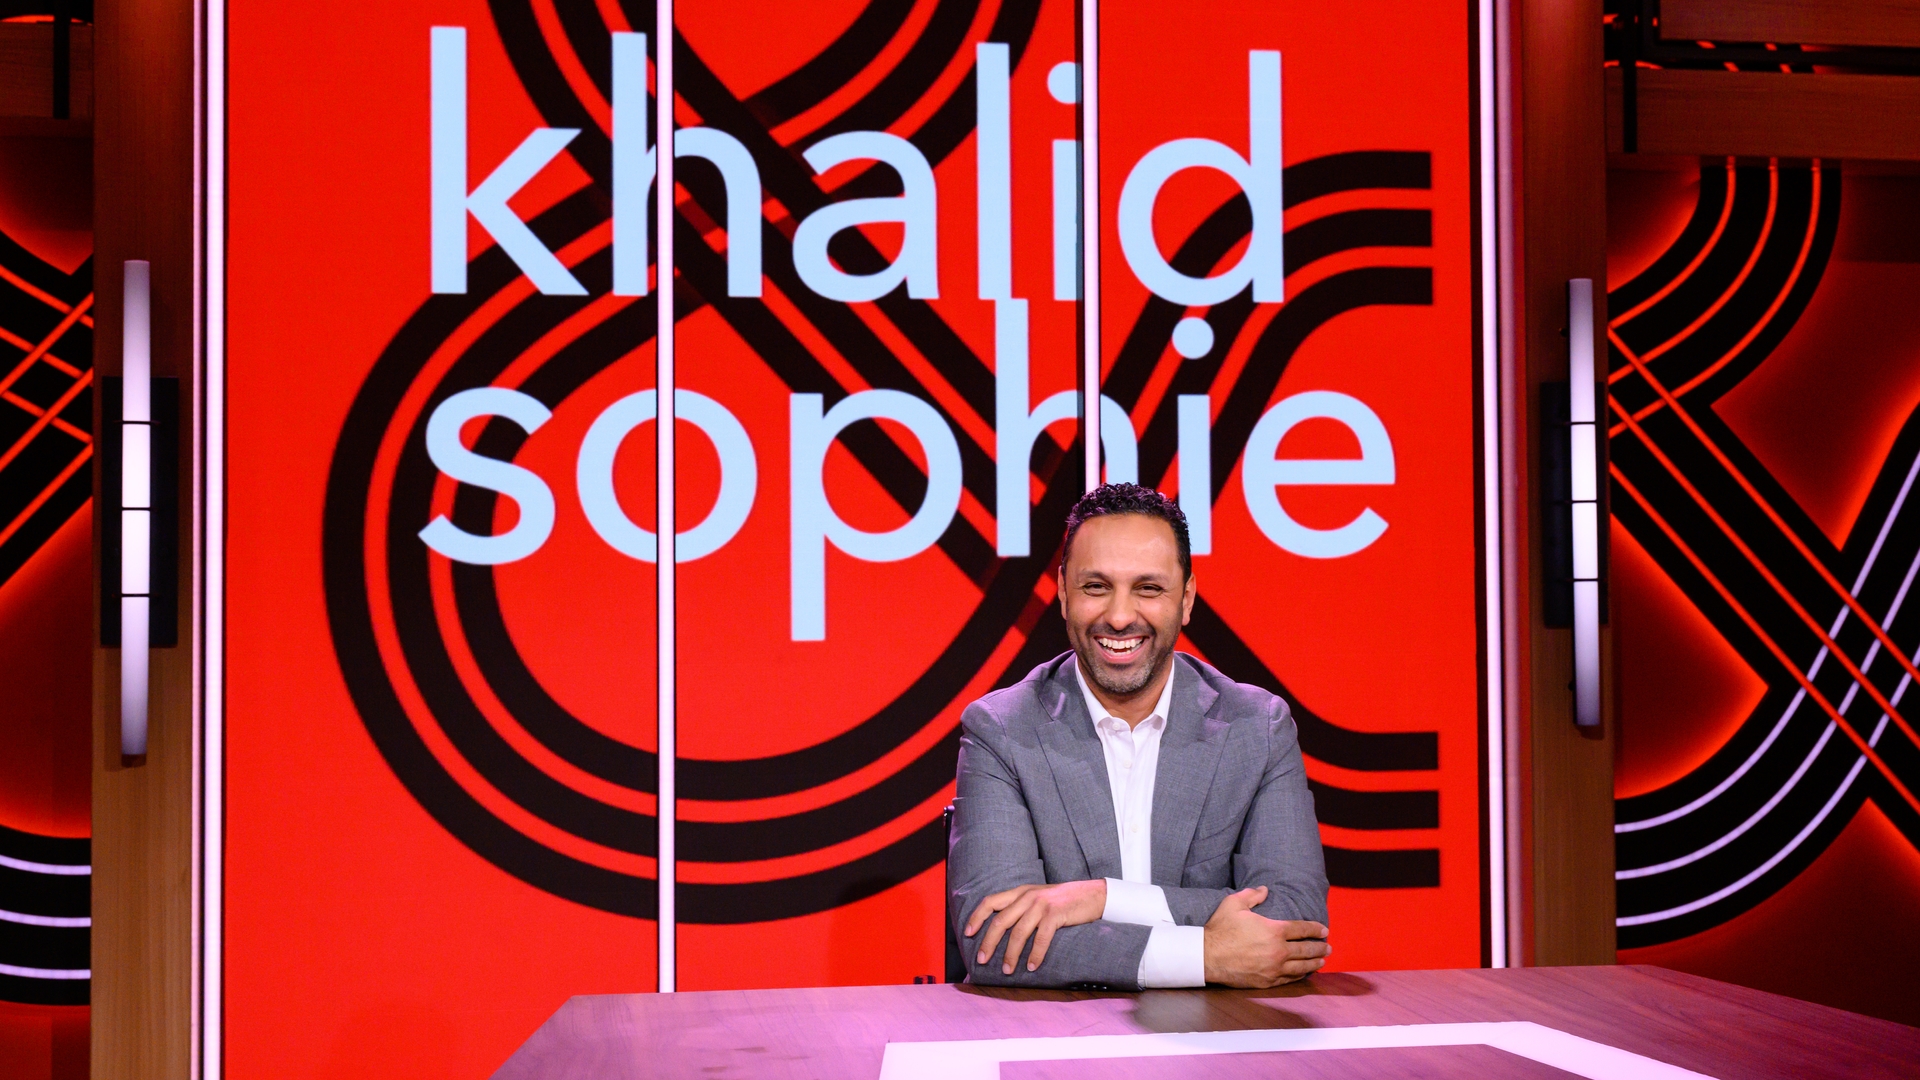 Khalid & Sophie - Khalid